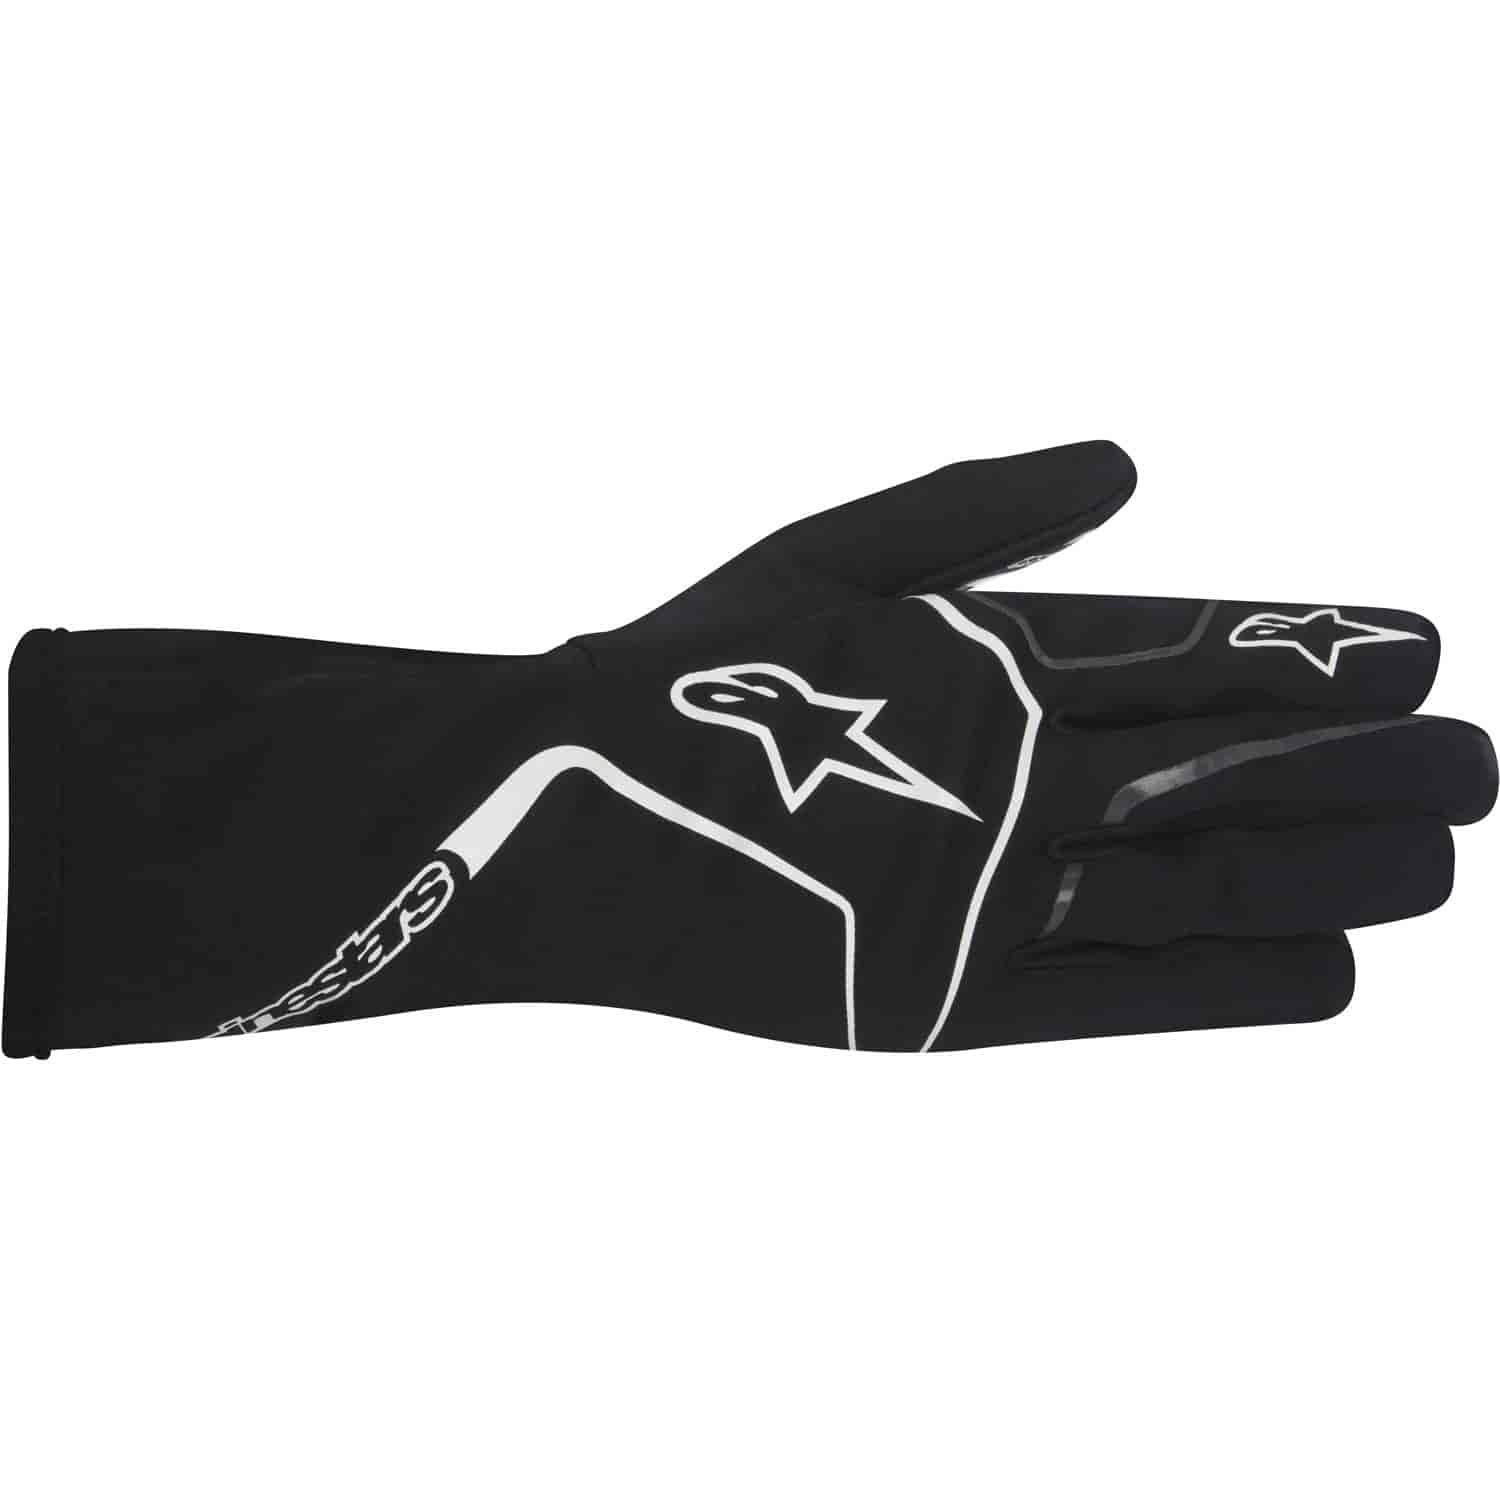 Tech 1-K Race S Youth Gloves Black/White